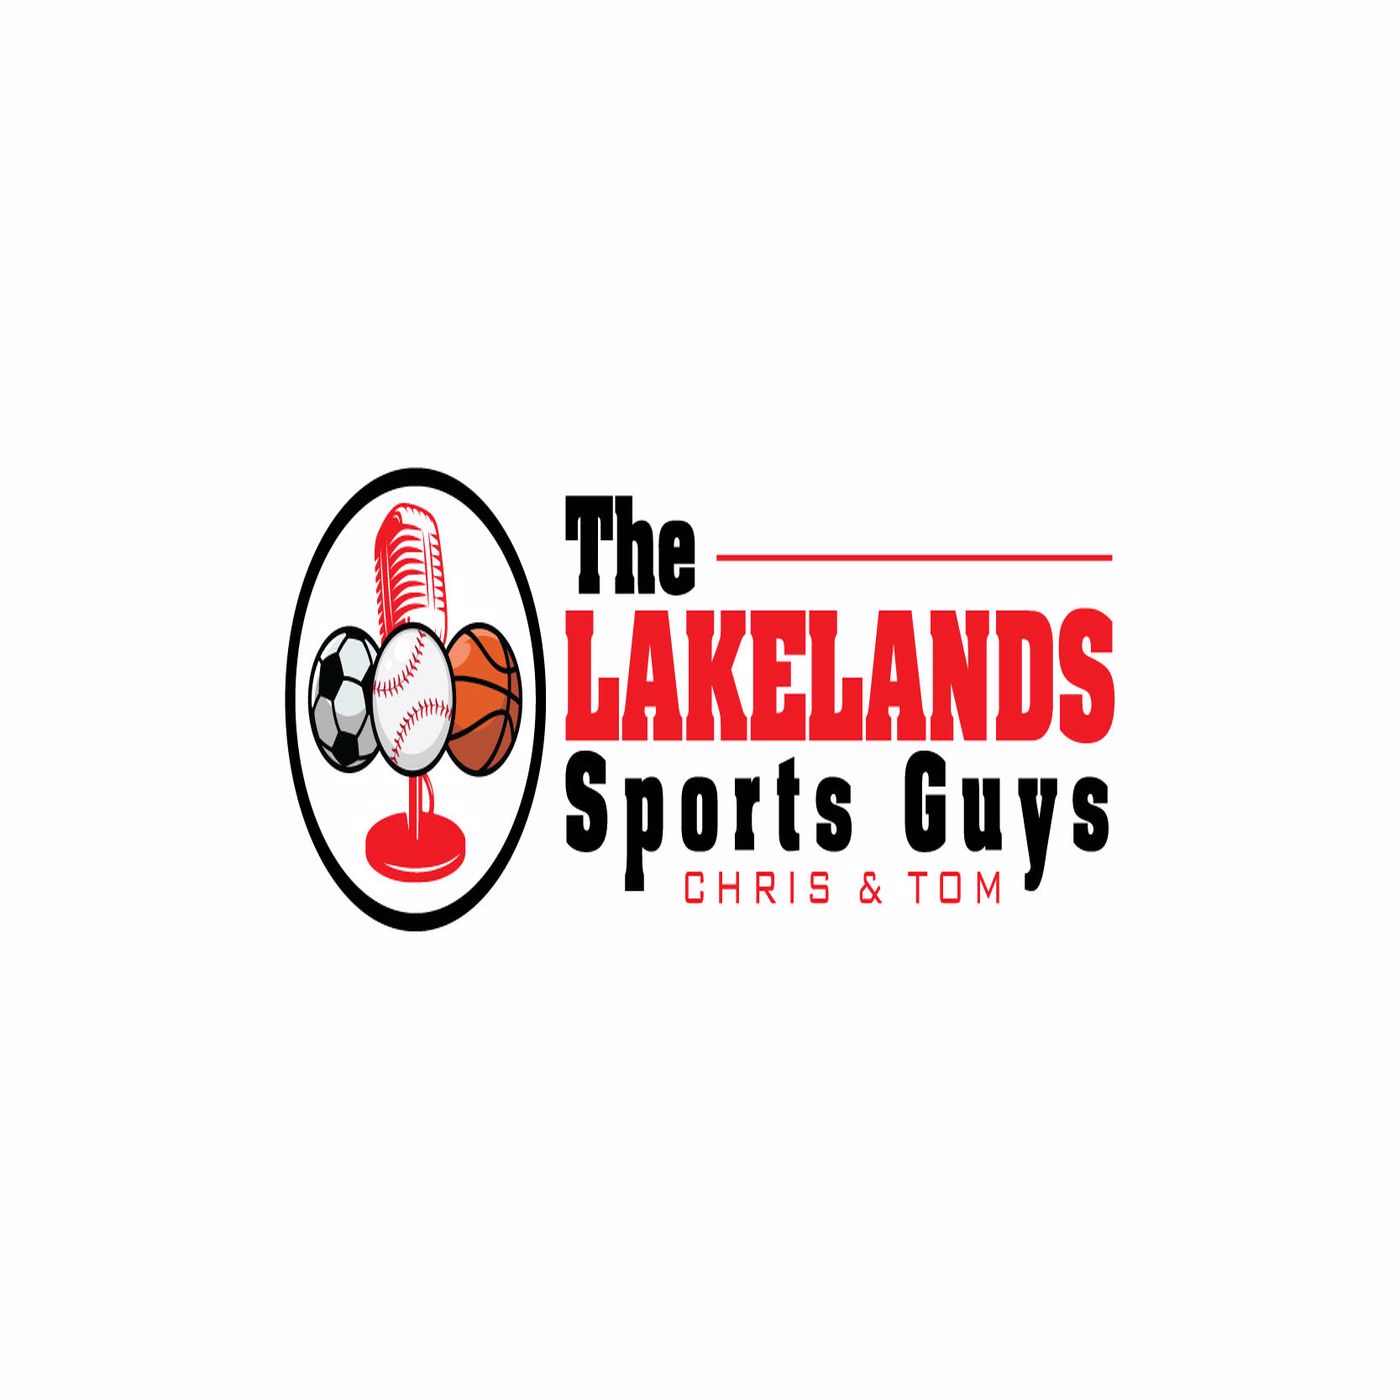 The Lakelands Sports Guys